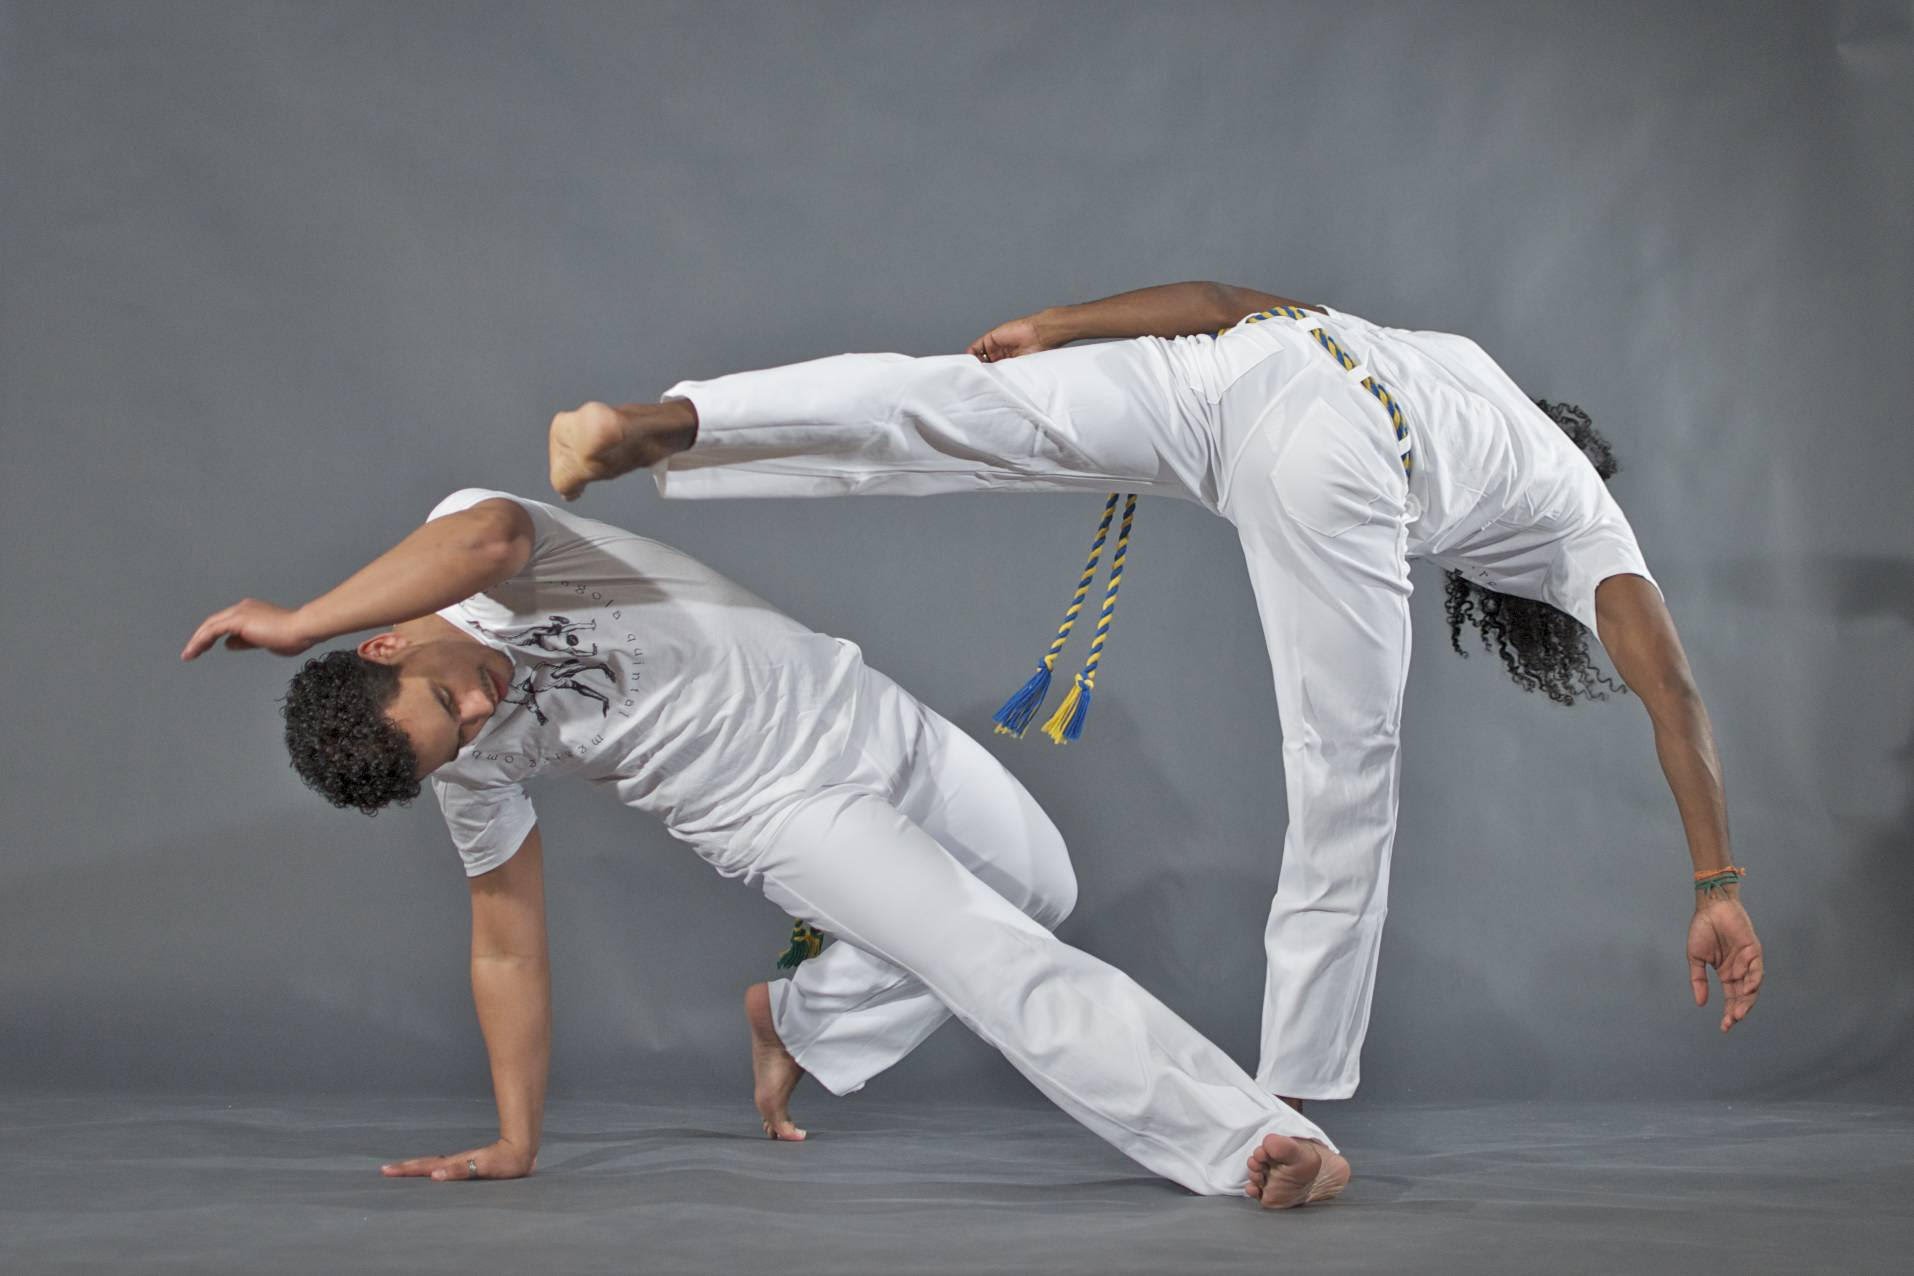 Capoeira event in New York City, April 2013, Os grandes mestres